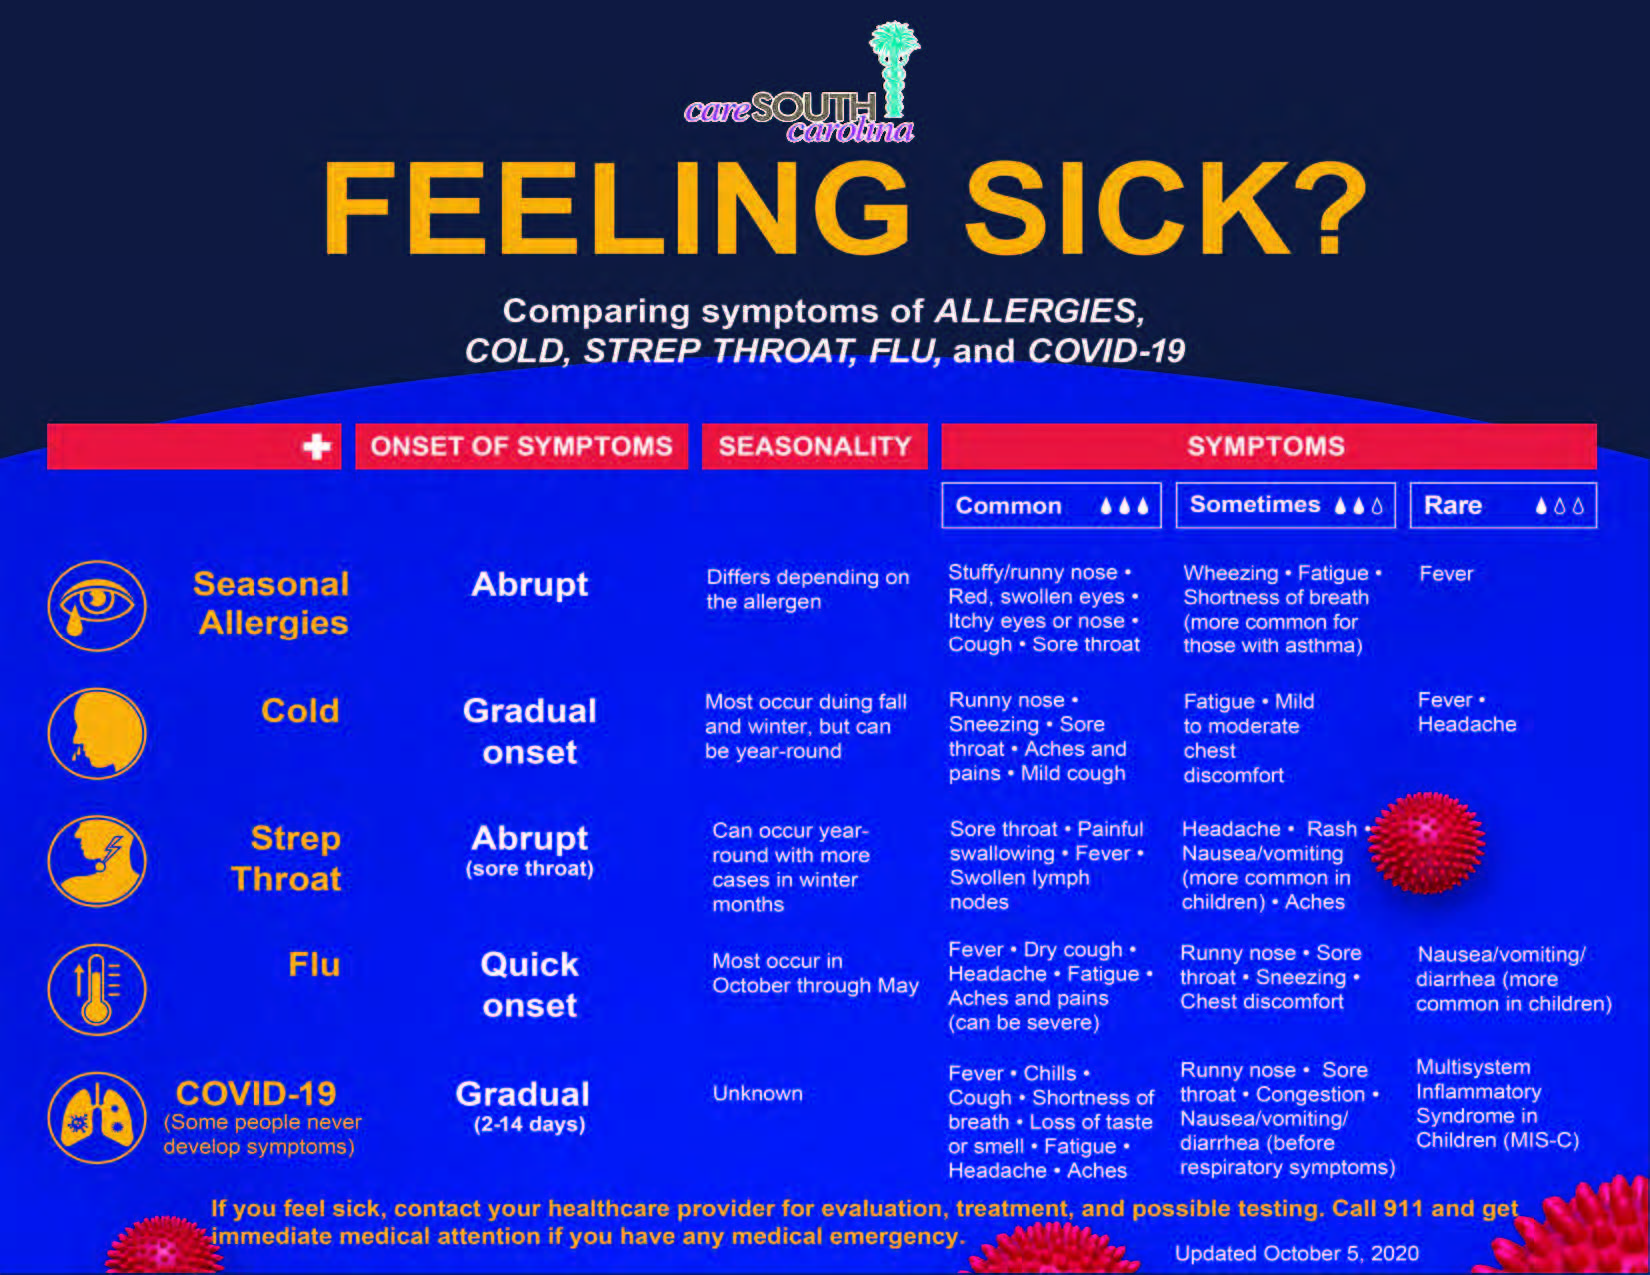 Feeling Sick? Comparing symptoms of Cold, Strep, Flu & COVID-19